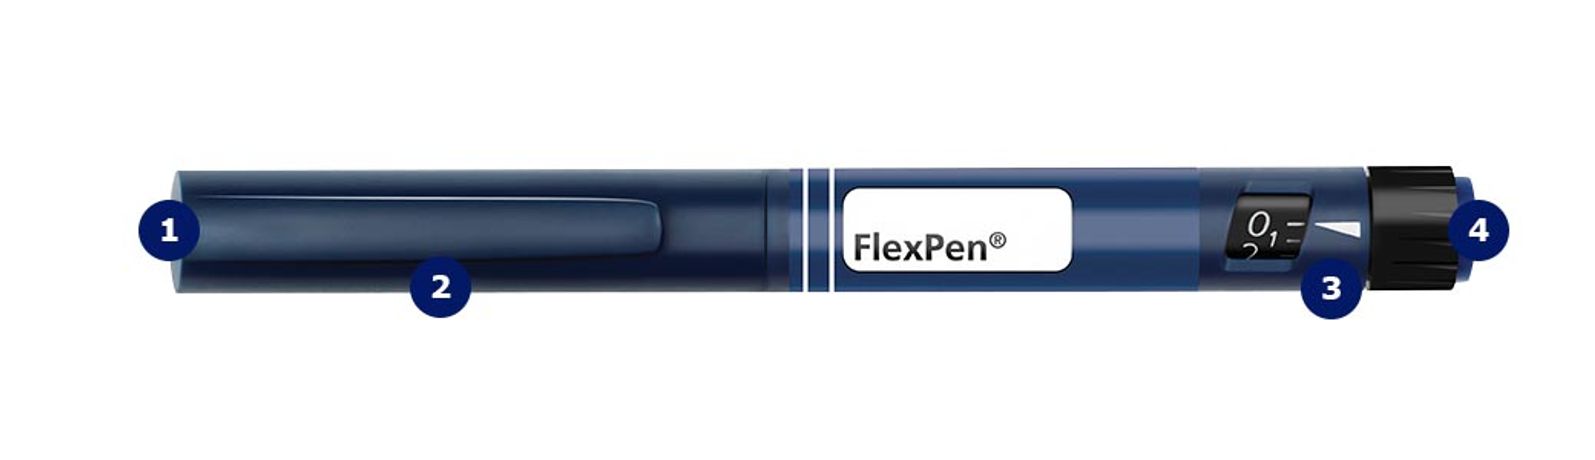 FlexPen - Insulin Pen